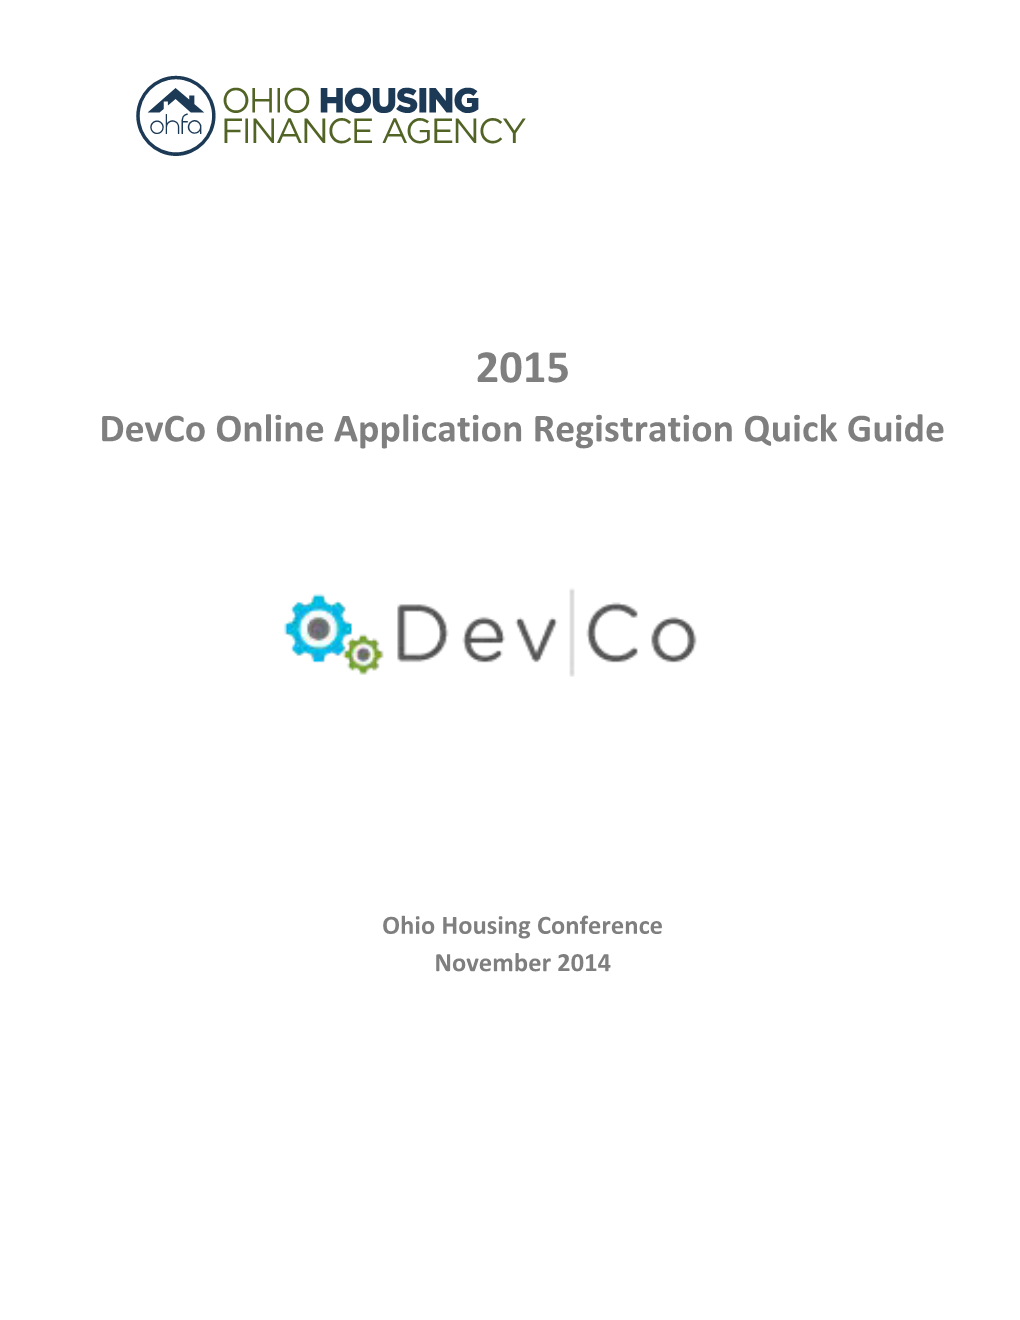 Devco Online Application Registration Quick Guide